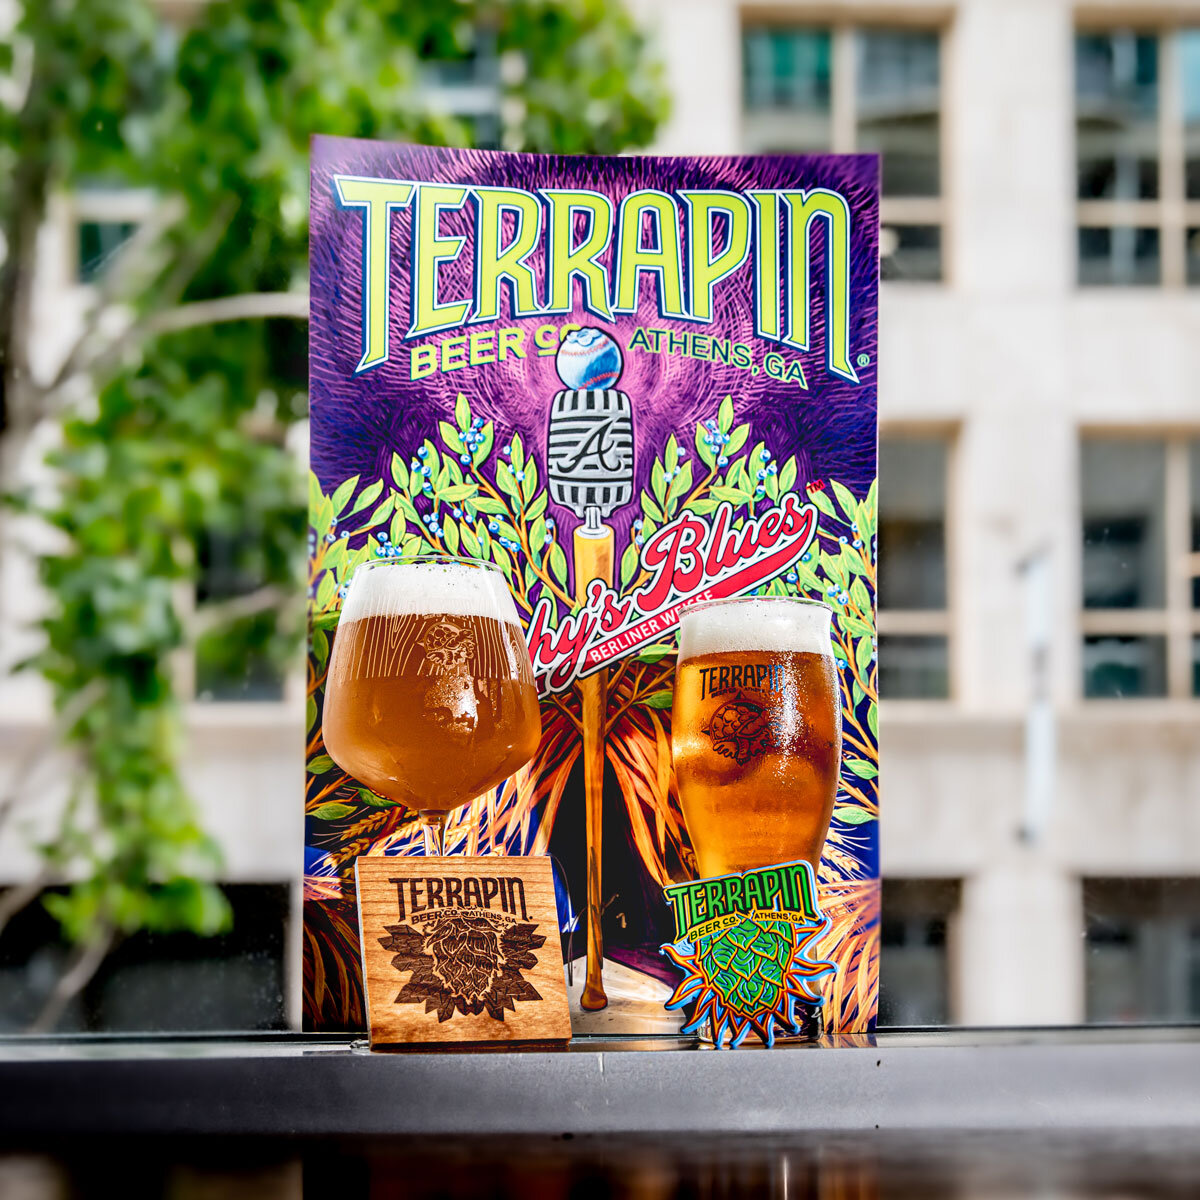 Georgia beers: Terrapin Pastime Pale Ale